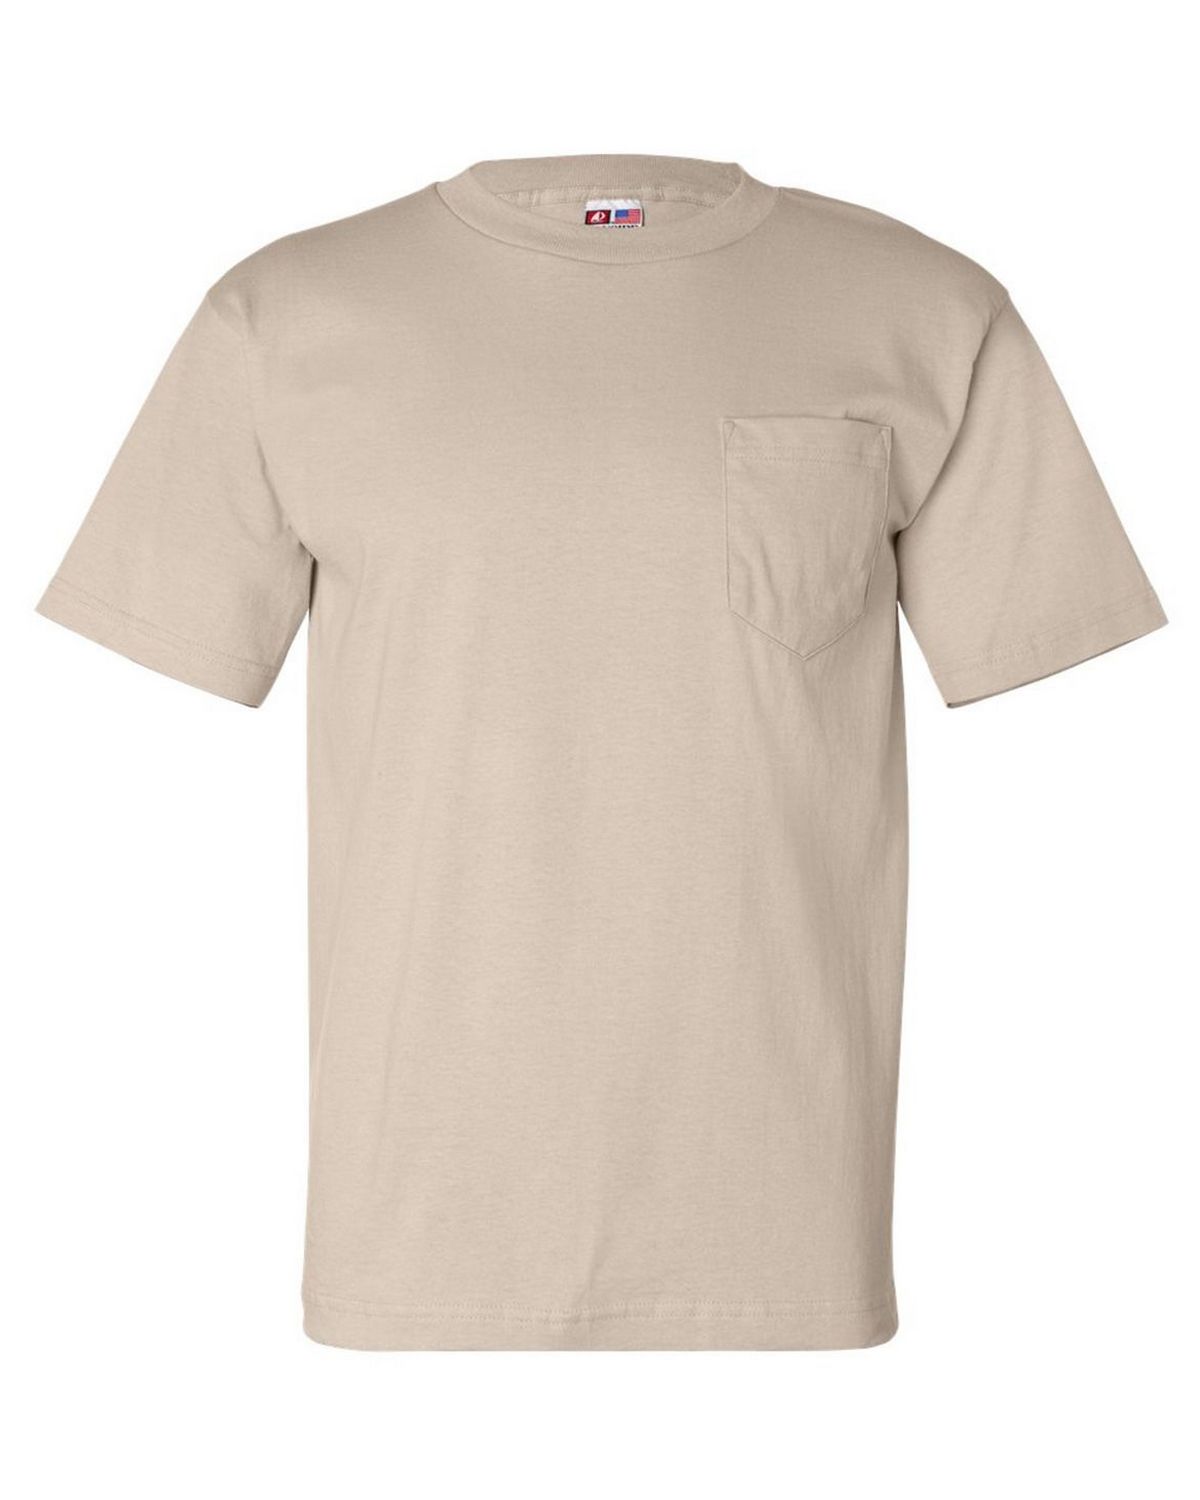 7100 Bayside Mens Short-Sleeve with Pocket Basic Tee Shirt 